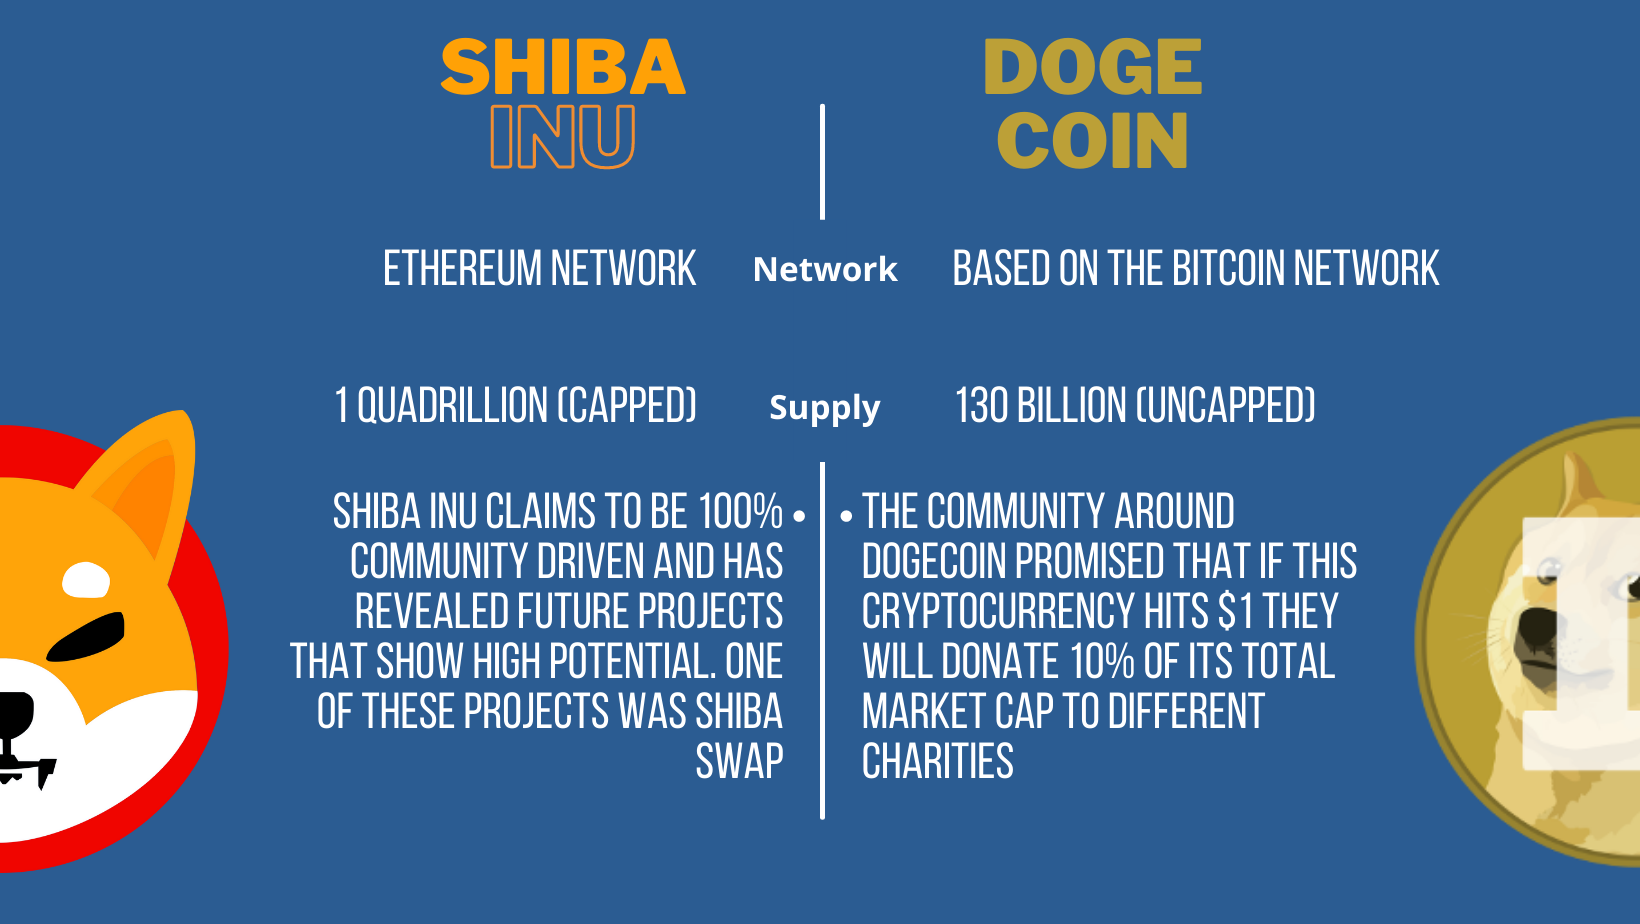 Dogecoin vs. Shiba Inu - Battle of the Memecoins